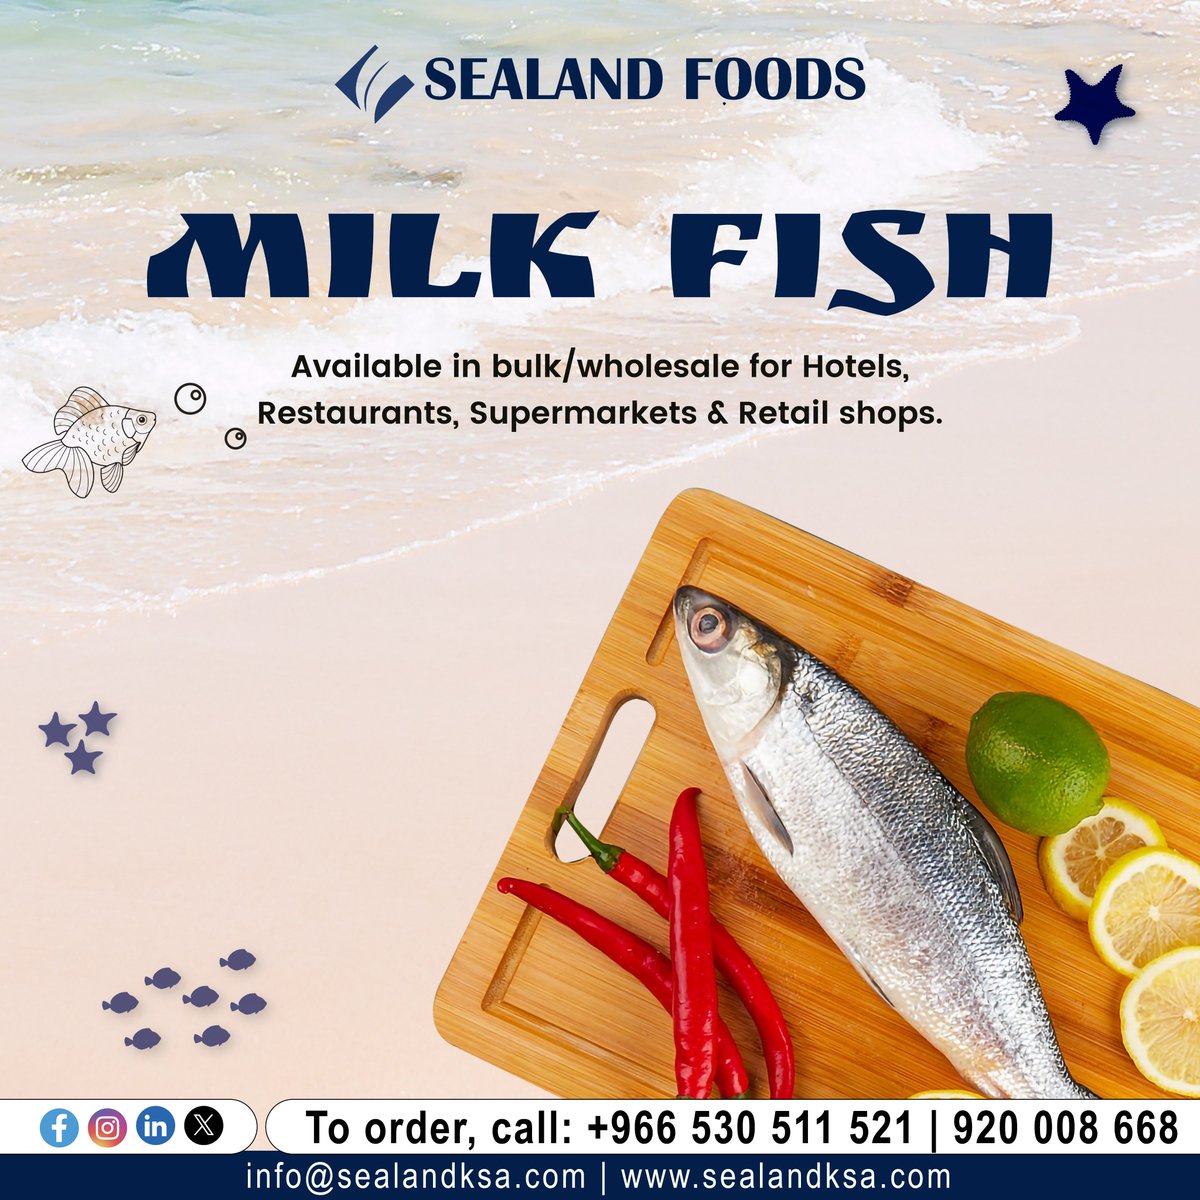 Experience excellence with Sealand Foods' fresh Milk Fish!
#sea #fresh #seafood #freshfood #healthyfood #freshseafood #seafoodlovers #seafoods #seafooddelivery #bestseafood #freshout #seafoodlover #shrimp #tuna #crab #seafoodies #Jeddah #Saudiarabia #finest #fishing #milkfish🐟